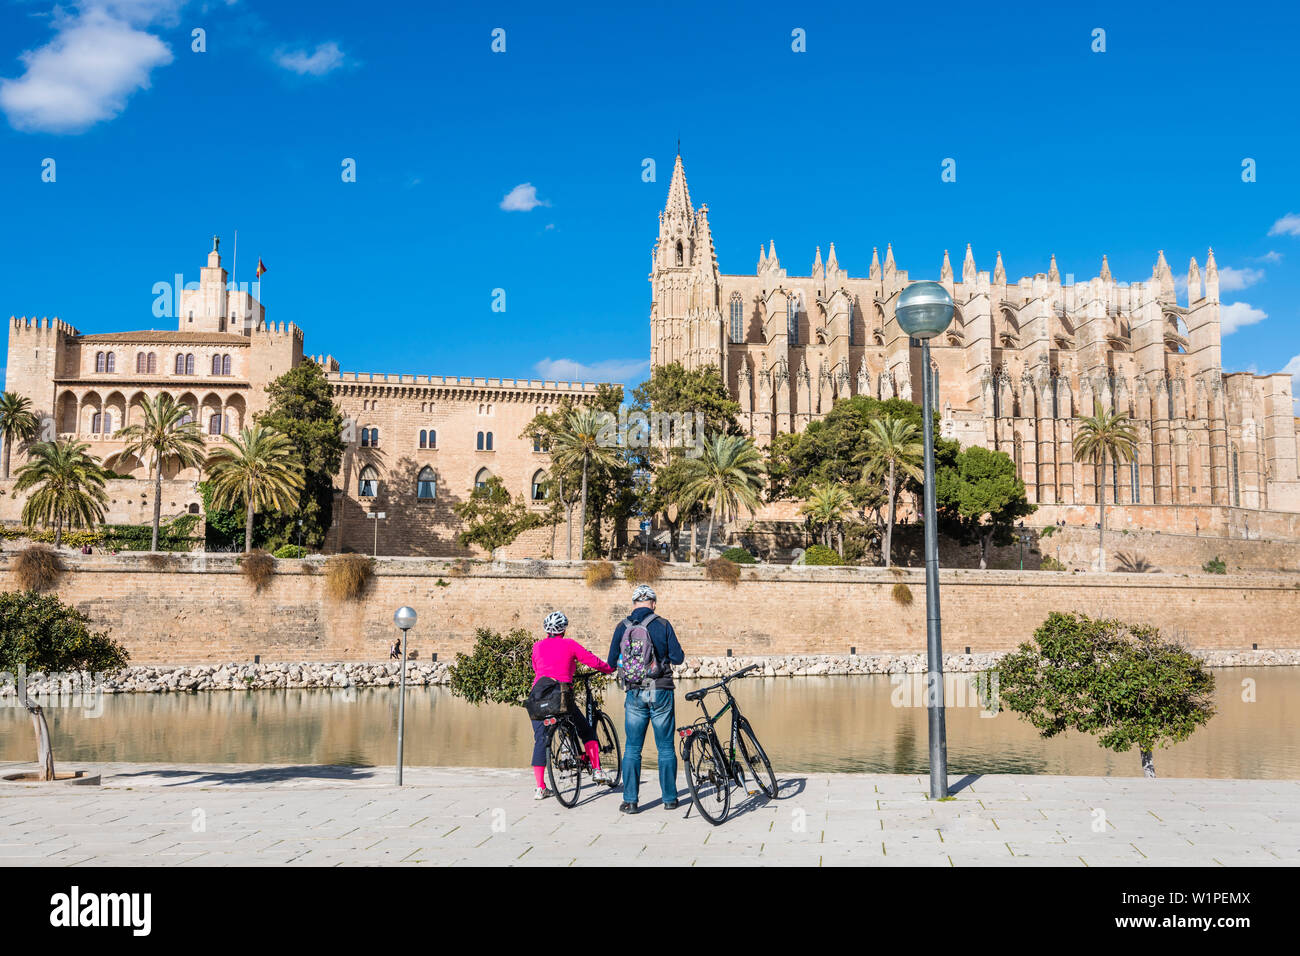 Cathedral of Santa Maria, Almudaina Palace, Palma de Mallorca, Mallorca, Spain Stock Photo